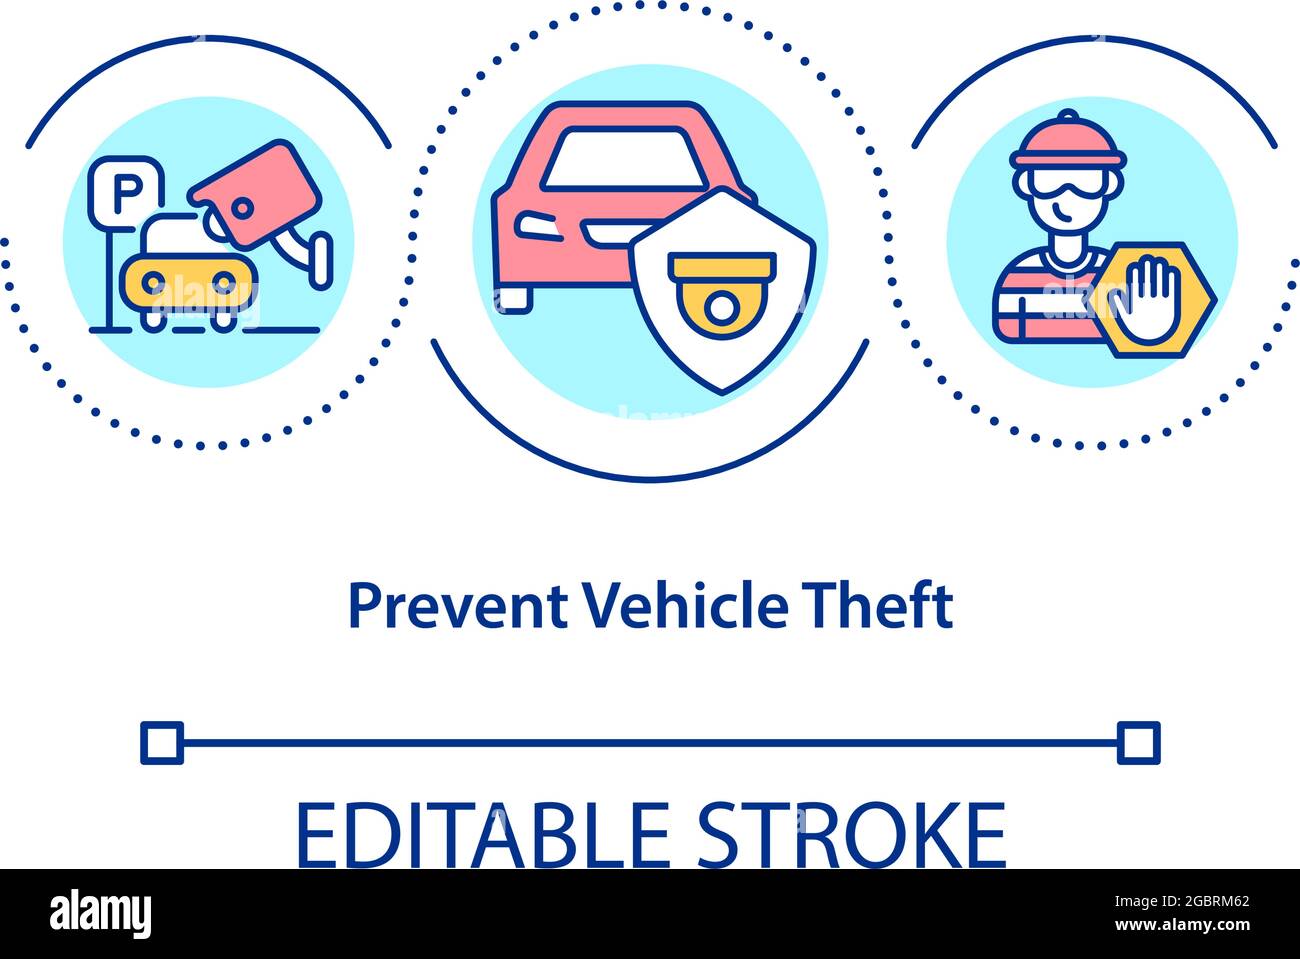 Prevent vehicle theft concept icon Stock Vector